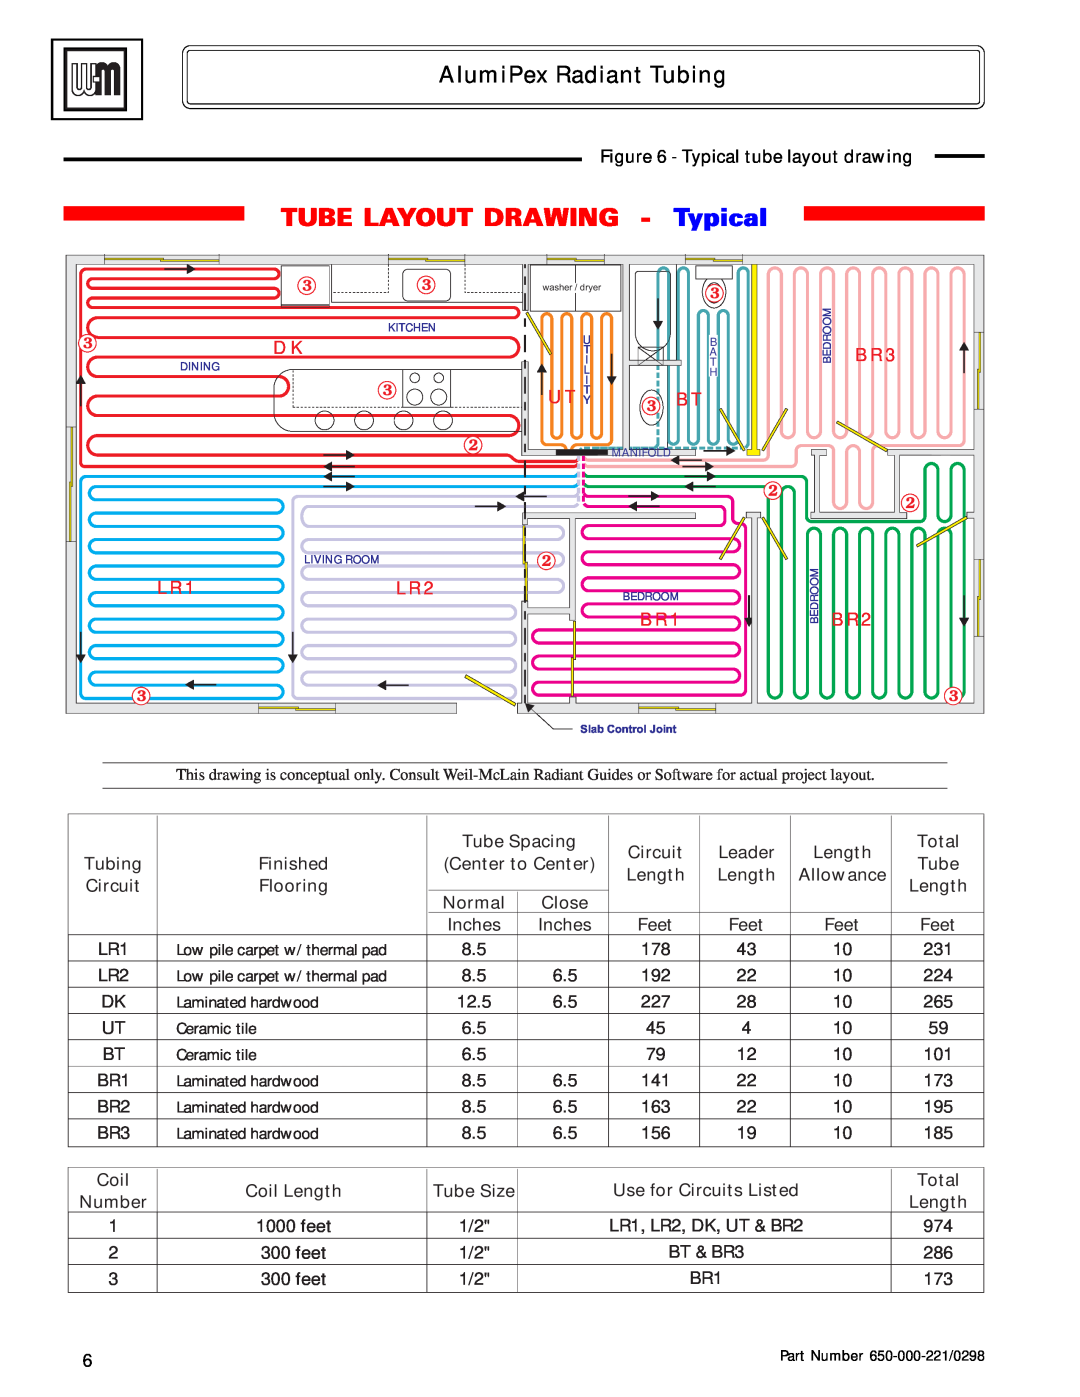 Weil-McLain Radiant Heater manual AlumiPex Radiant Tubing, Ut Y 